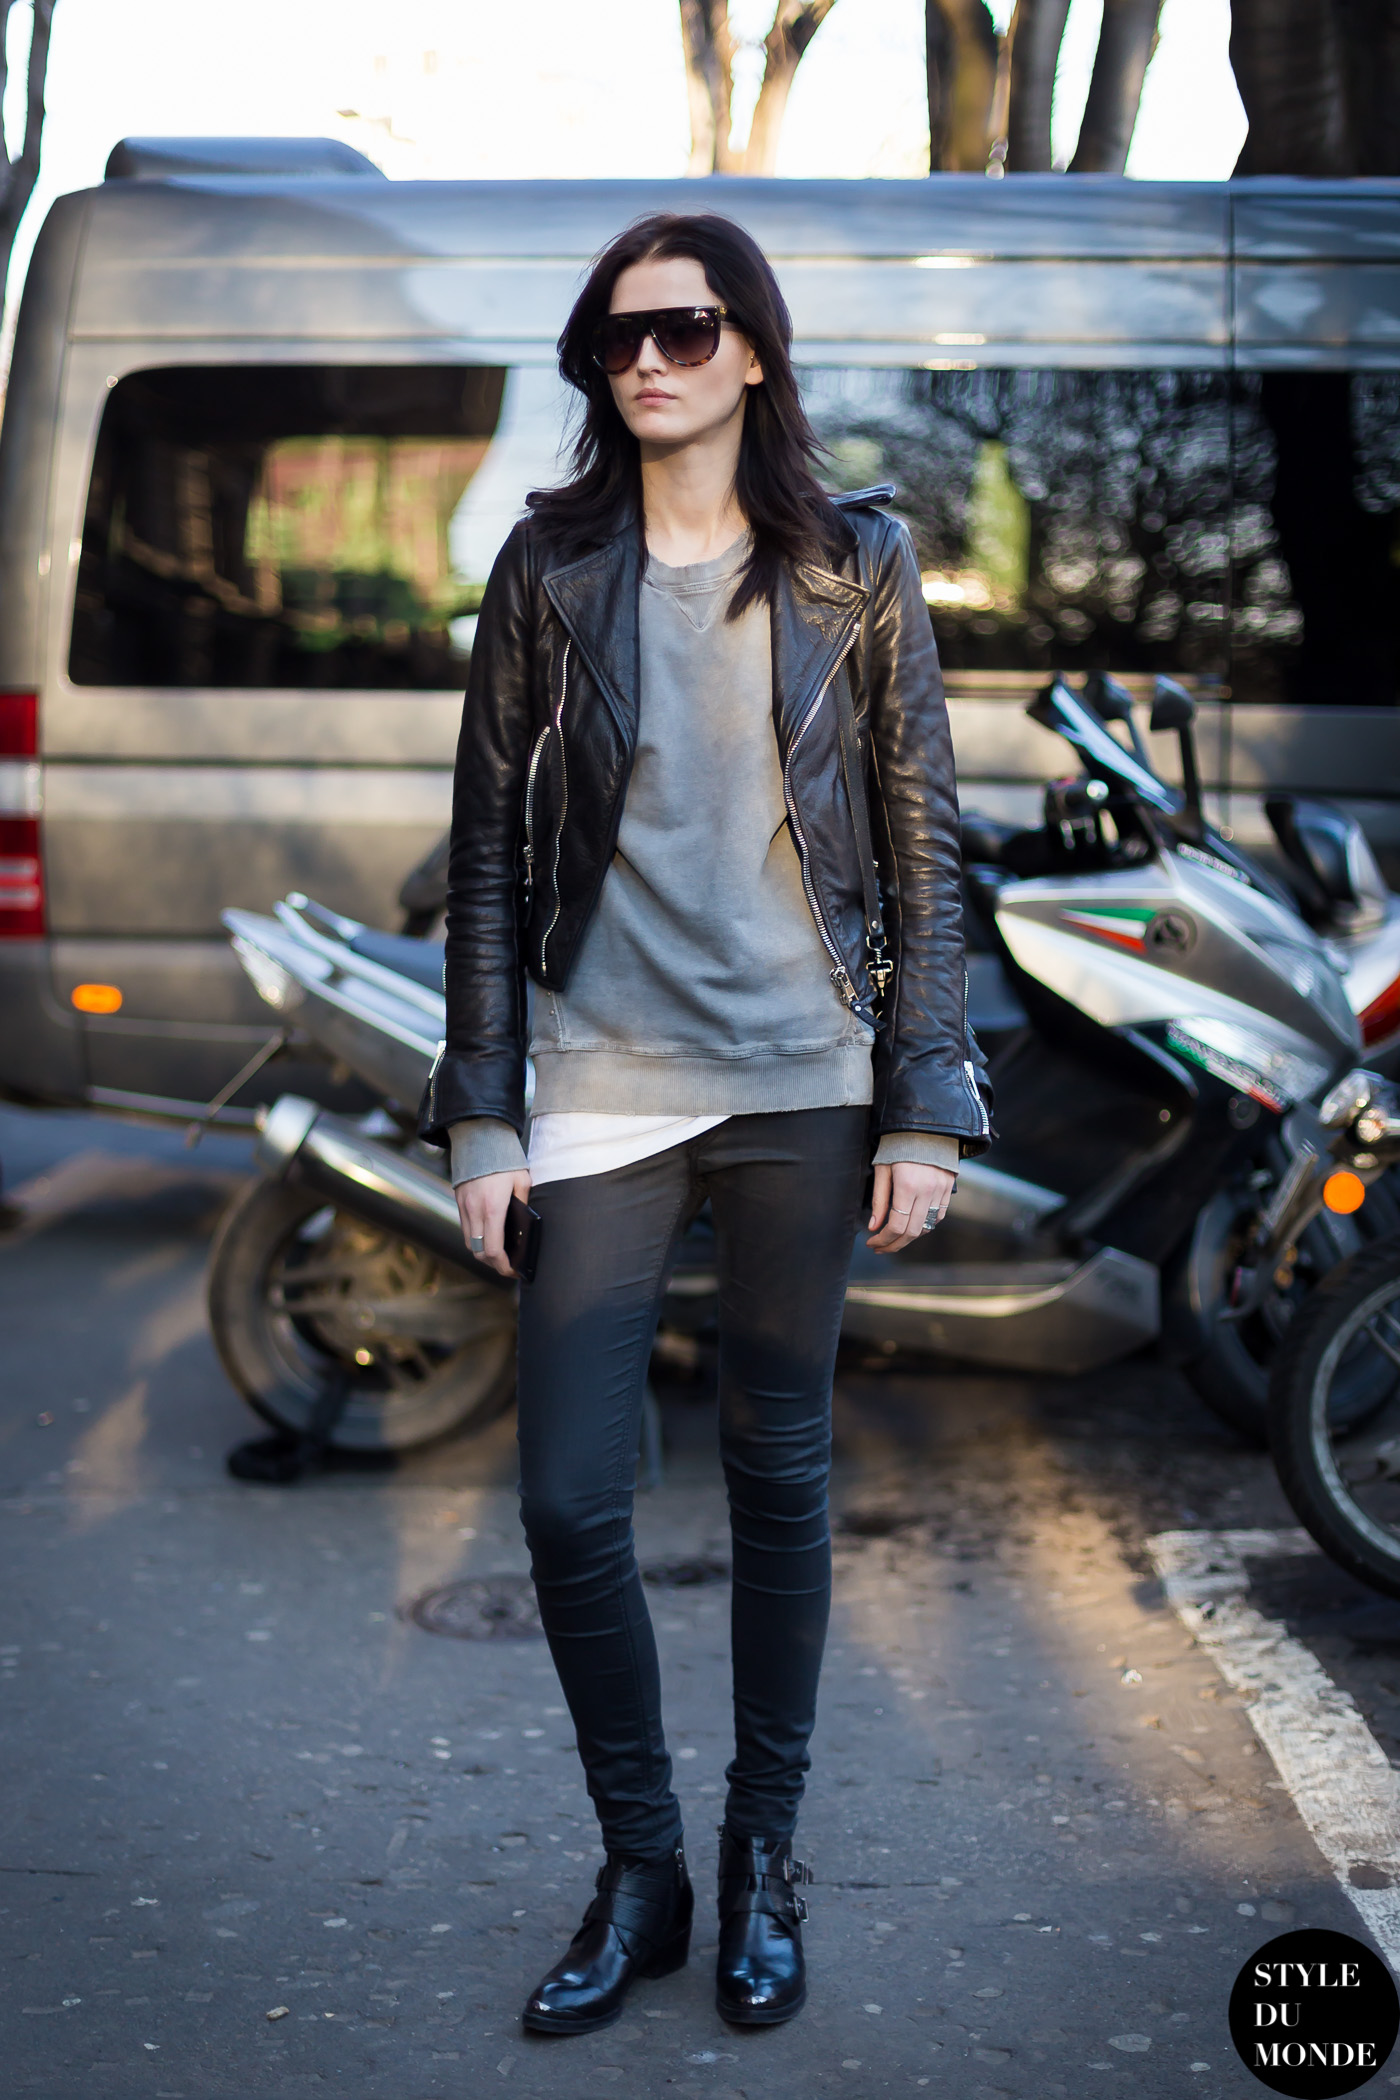 Milan Fashion Week FW 2014 Street Style: Katlin Aas - STYLE DU MONDE ...